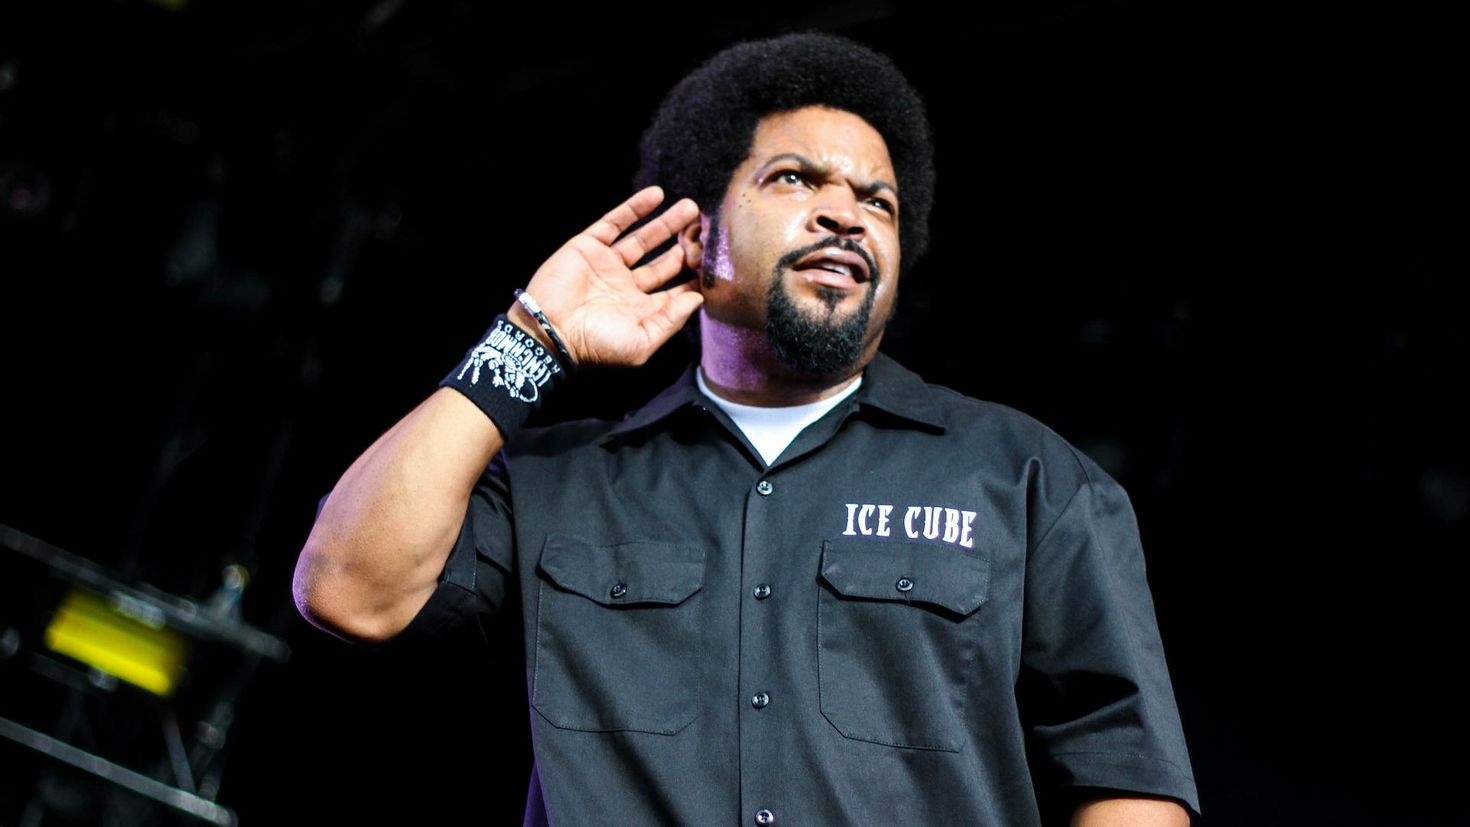 Icecube. Ice Cube Rapper. Айс Кьюб (Ice Cube). Ice Cube 2011. Ice Cube 2000.